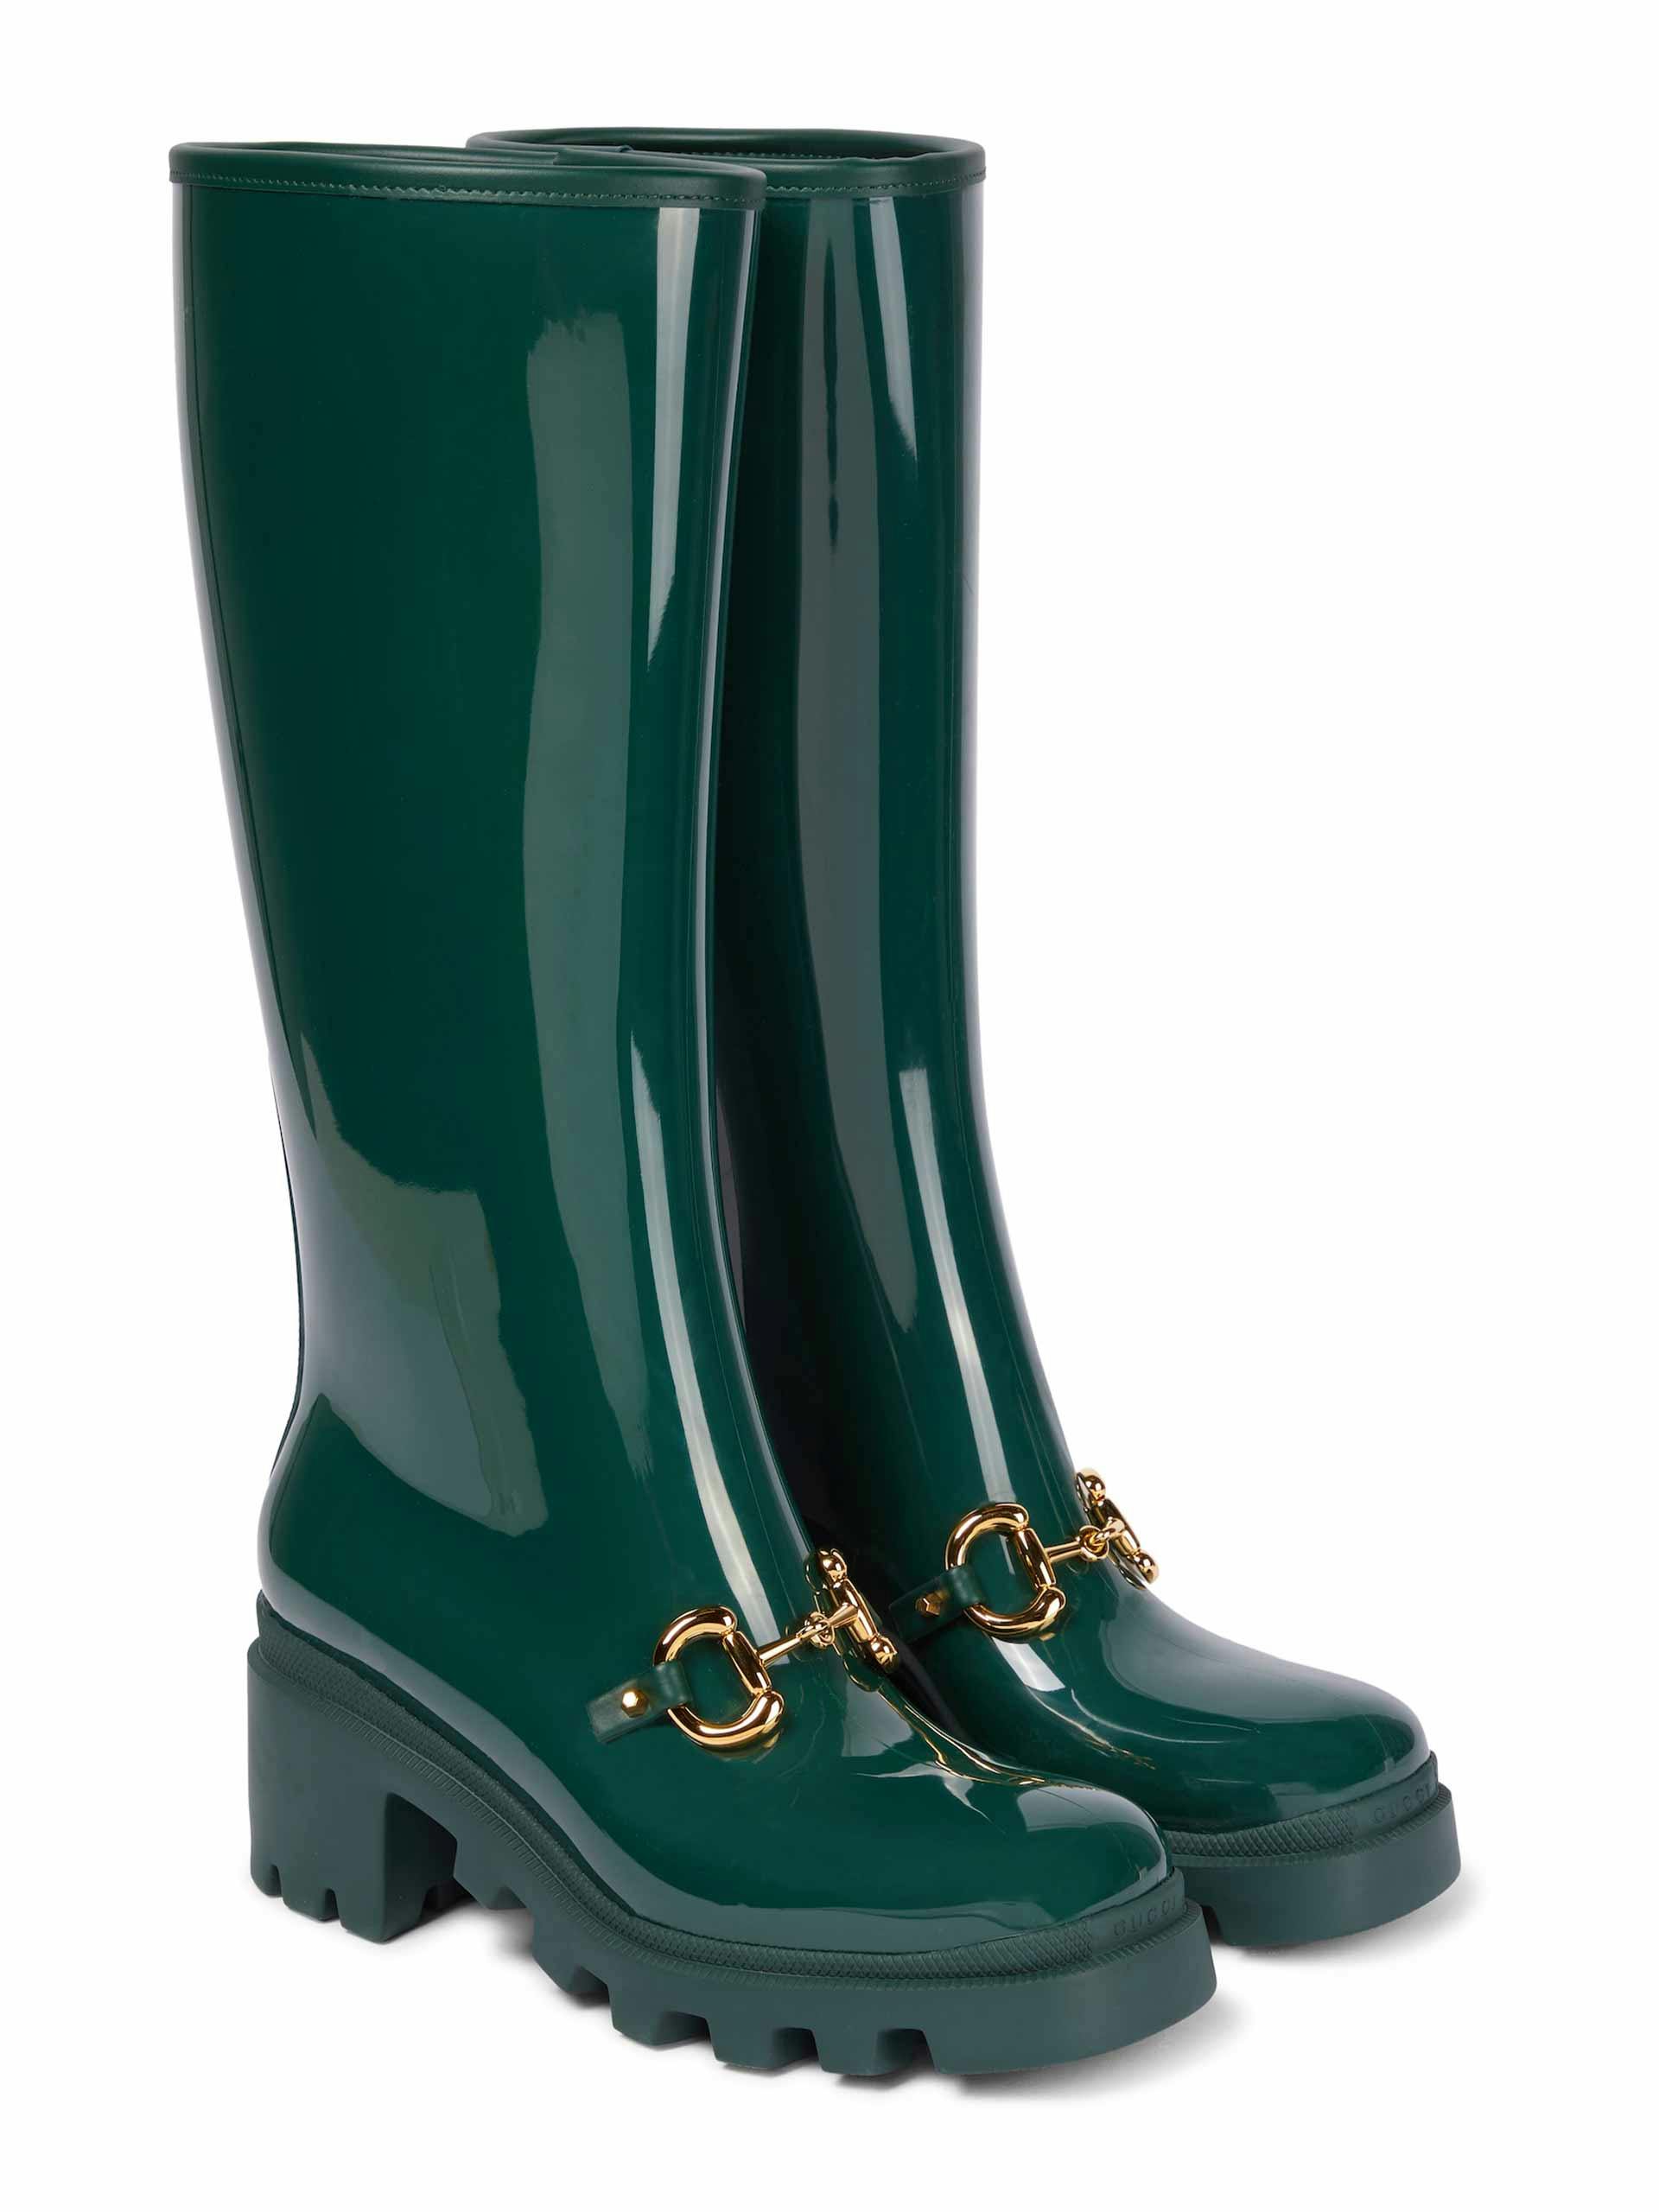 Green rubber knee high boots